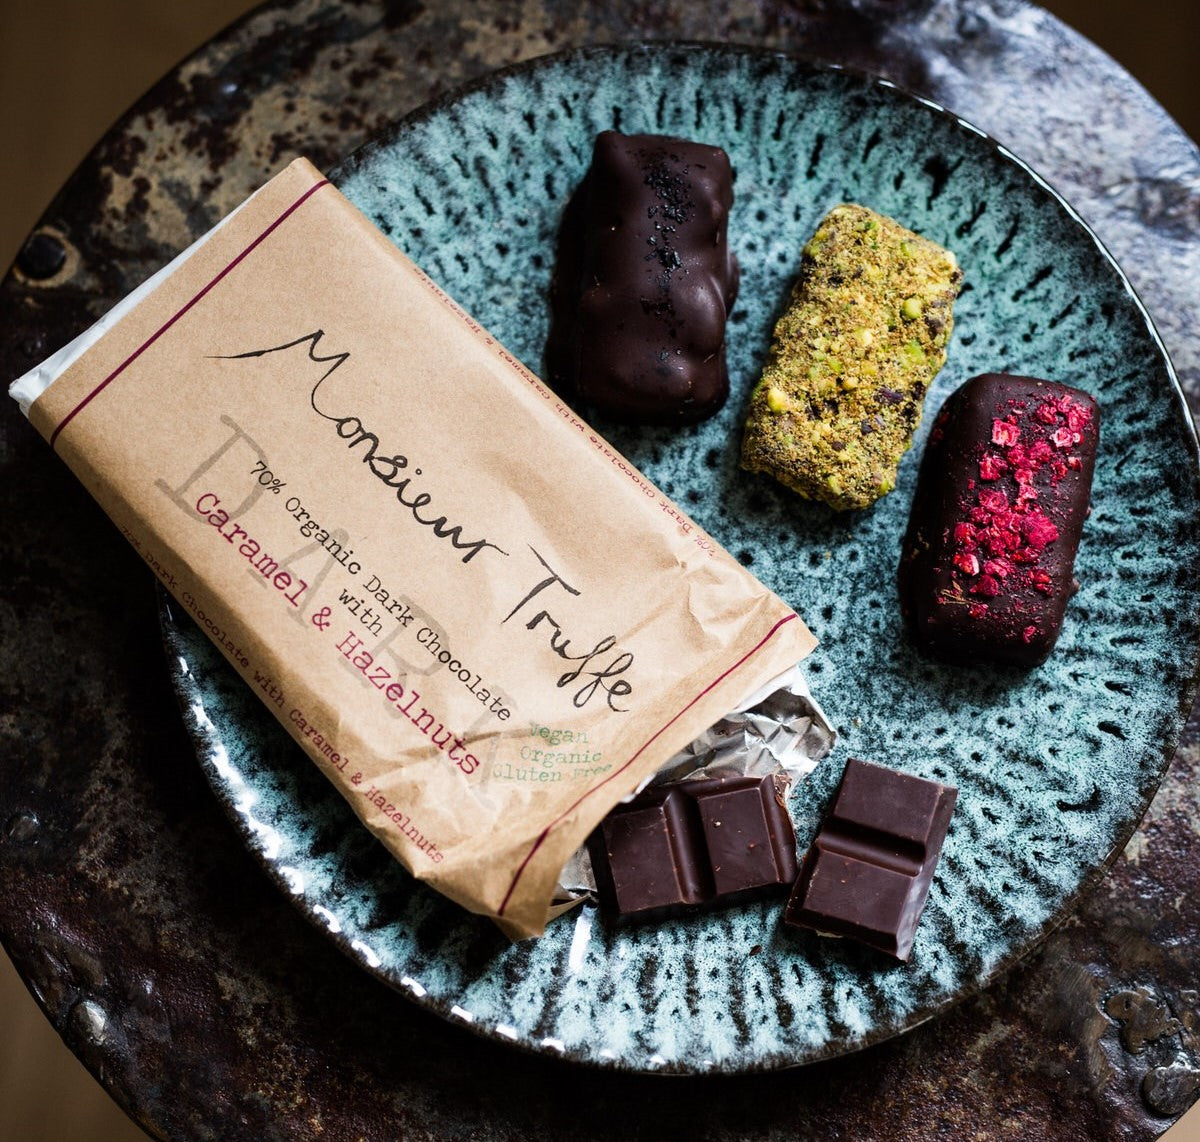 Vegan chocolate handmade in Melbourne